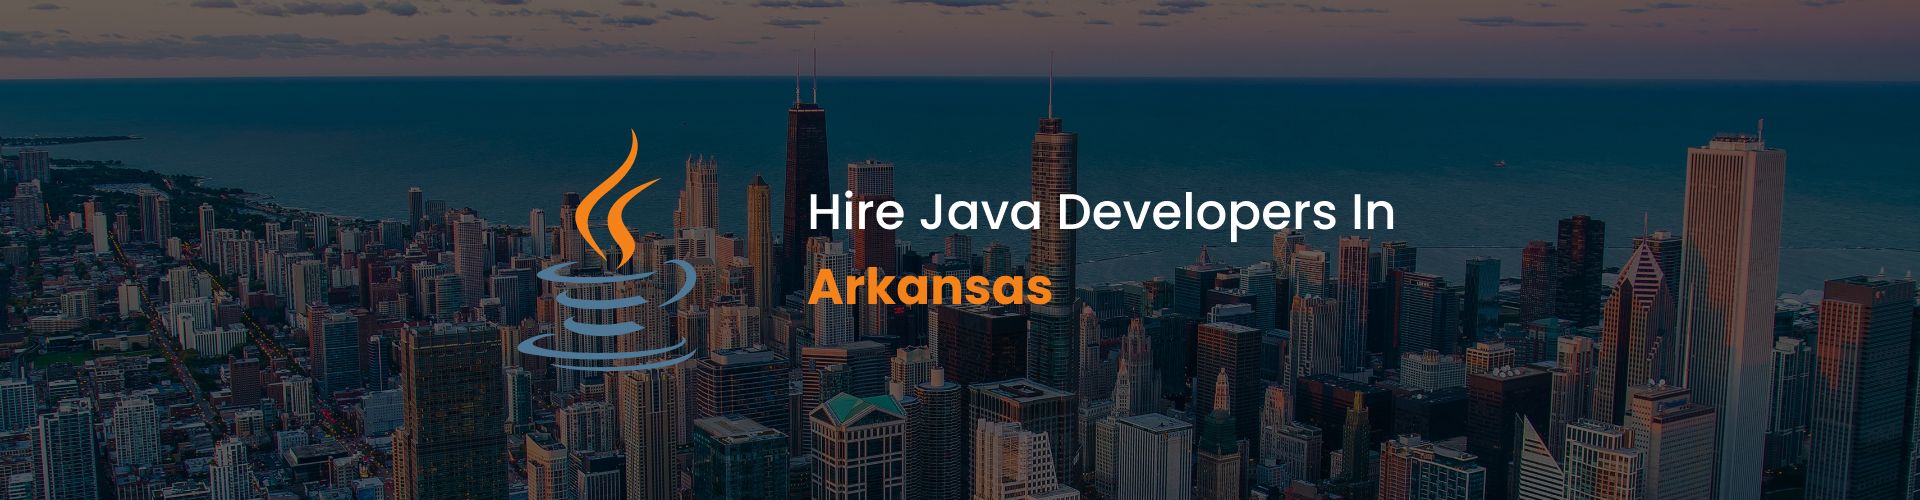 hire java developers in arkansas